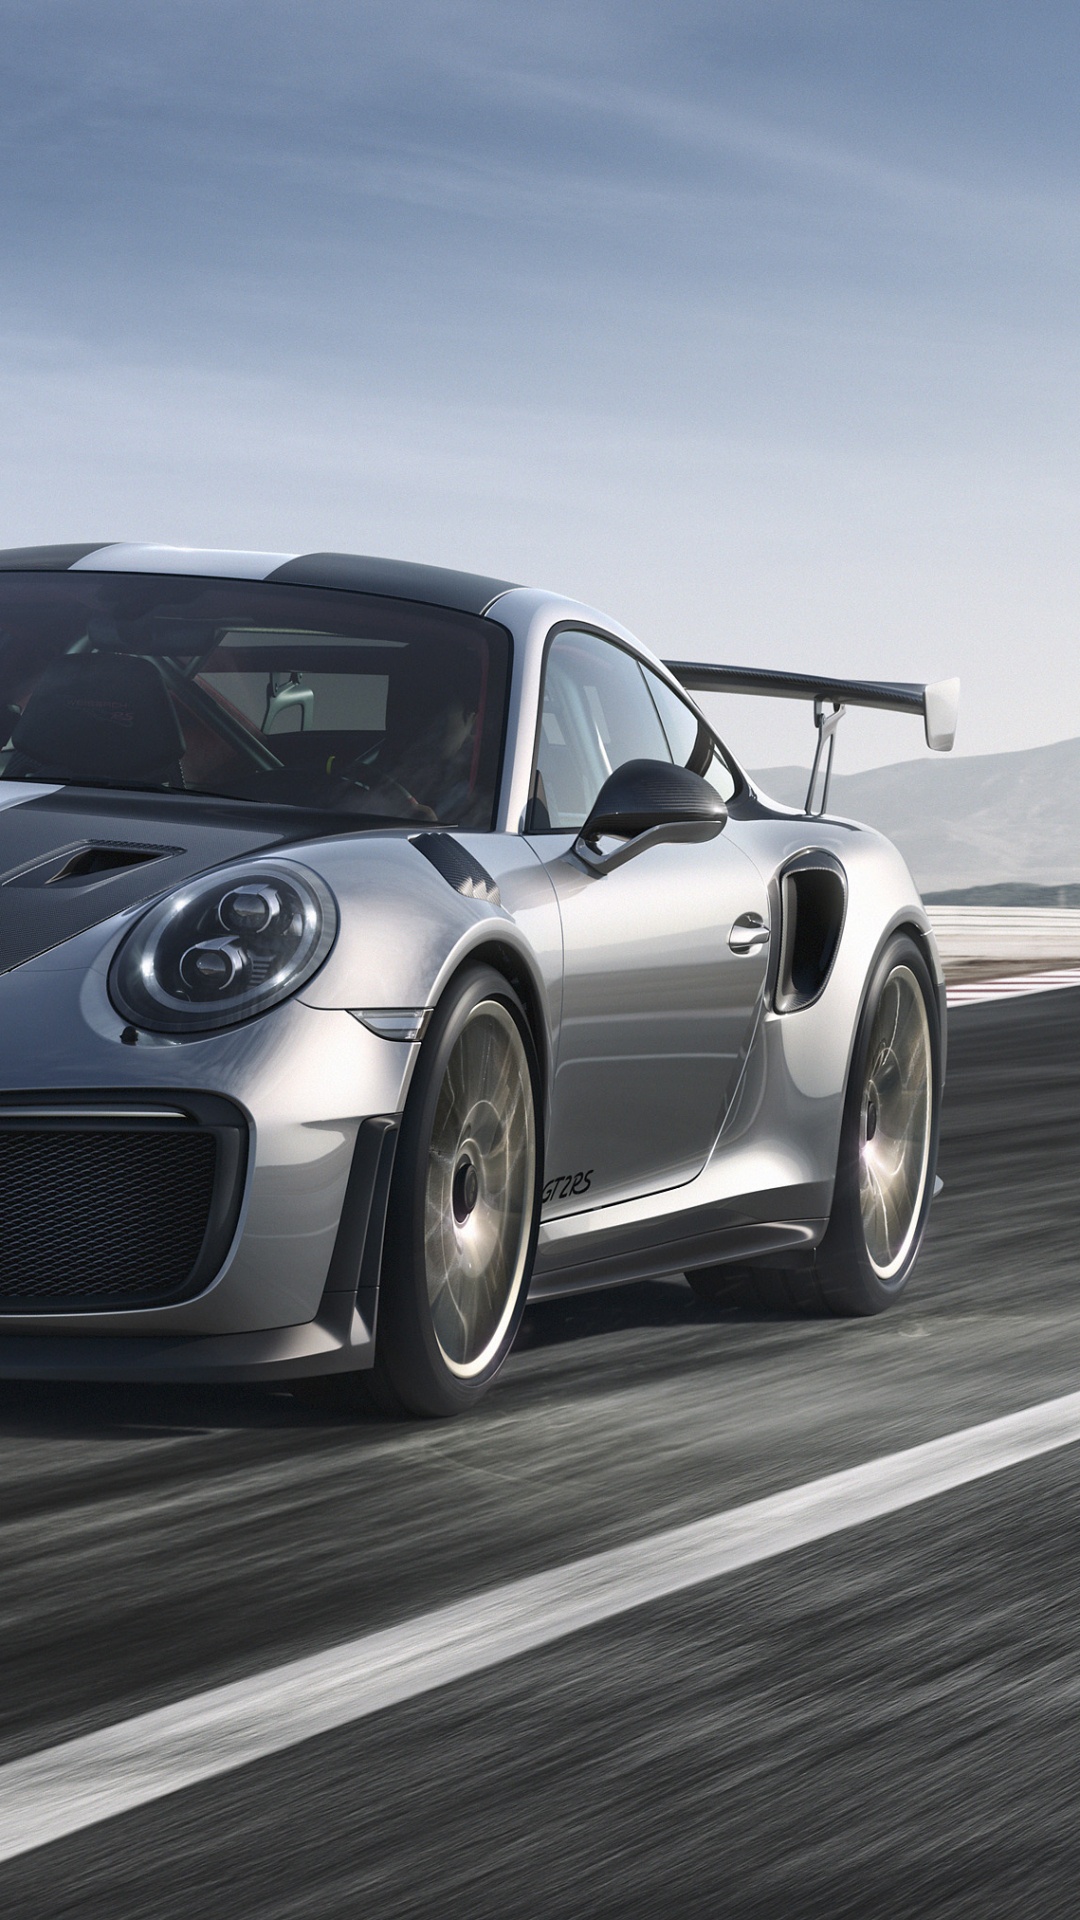 Porsche 911 Negro en la Carretera. Wallpaper in 1080x1920 Resolution